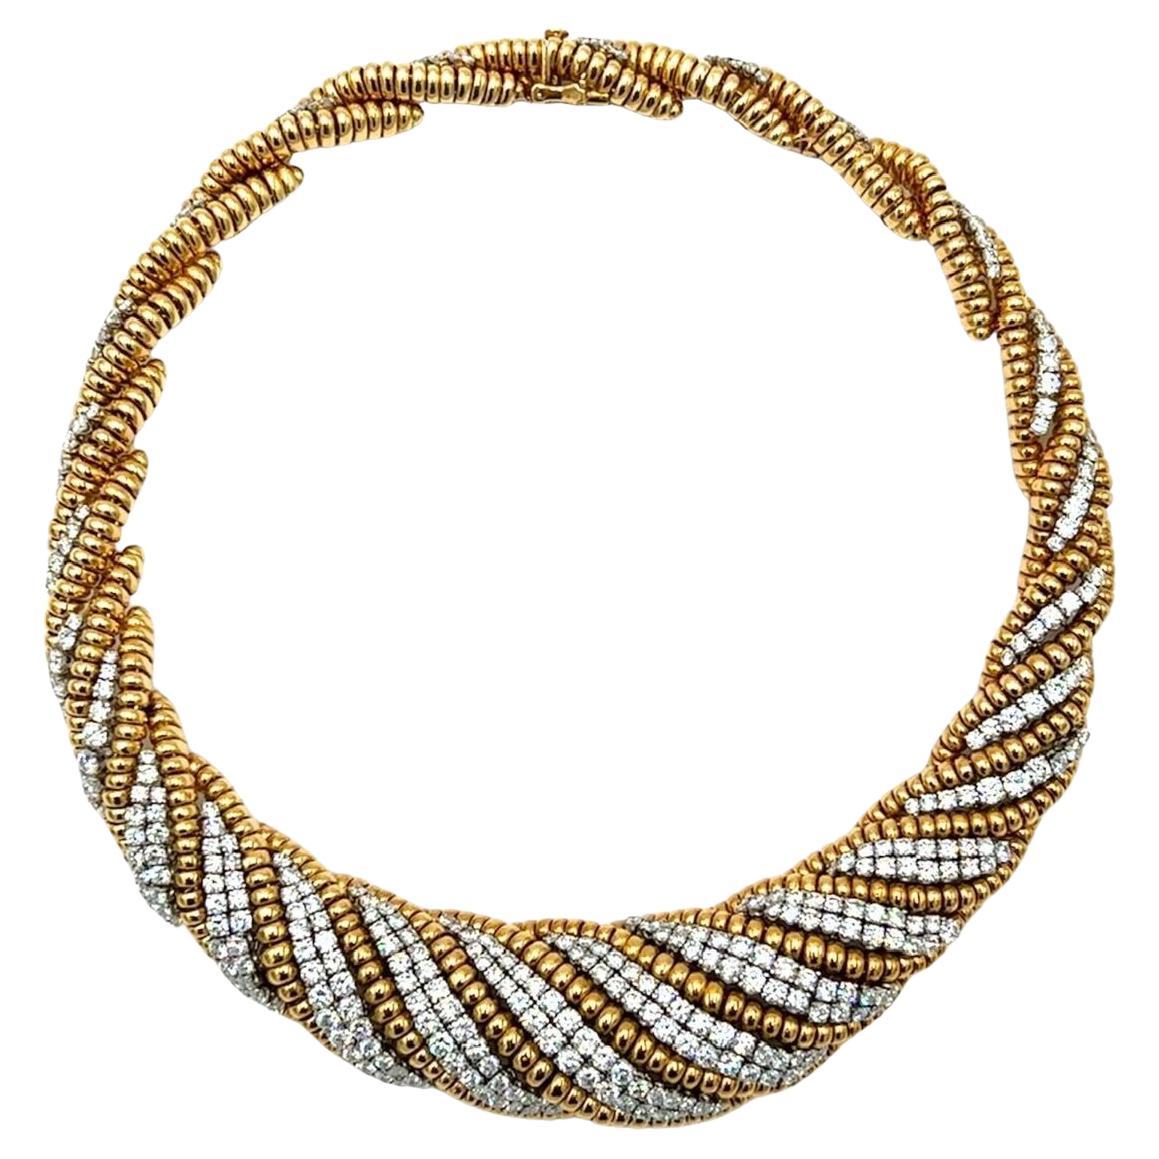 DAVID WEBB Gold, Platinum and Diamond Necklace